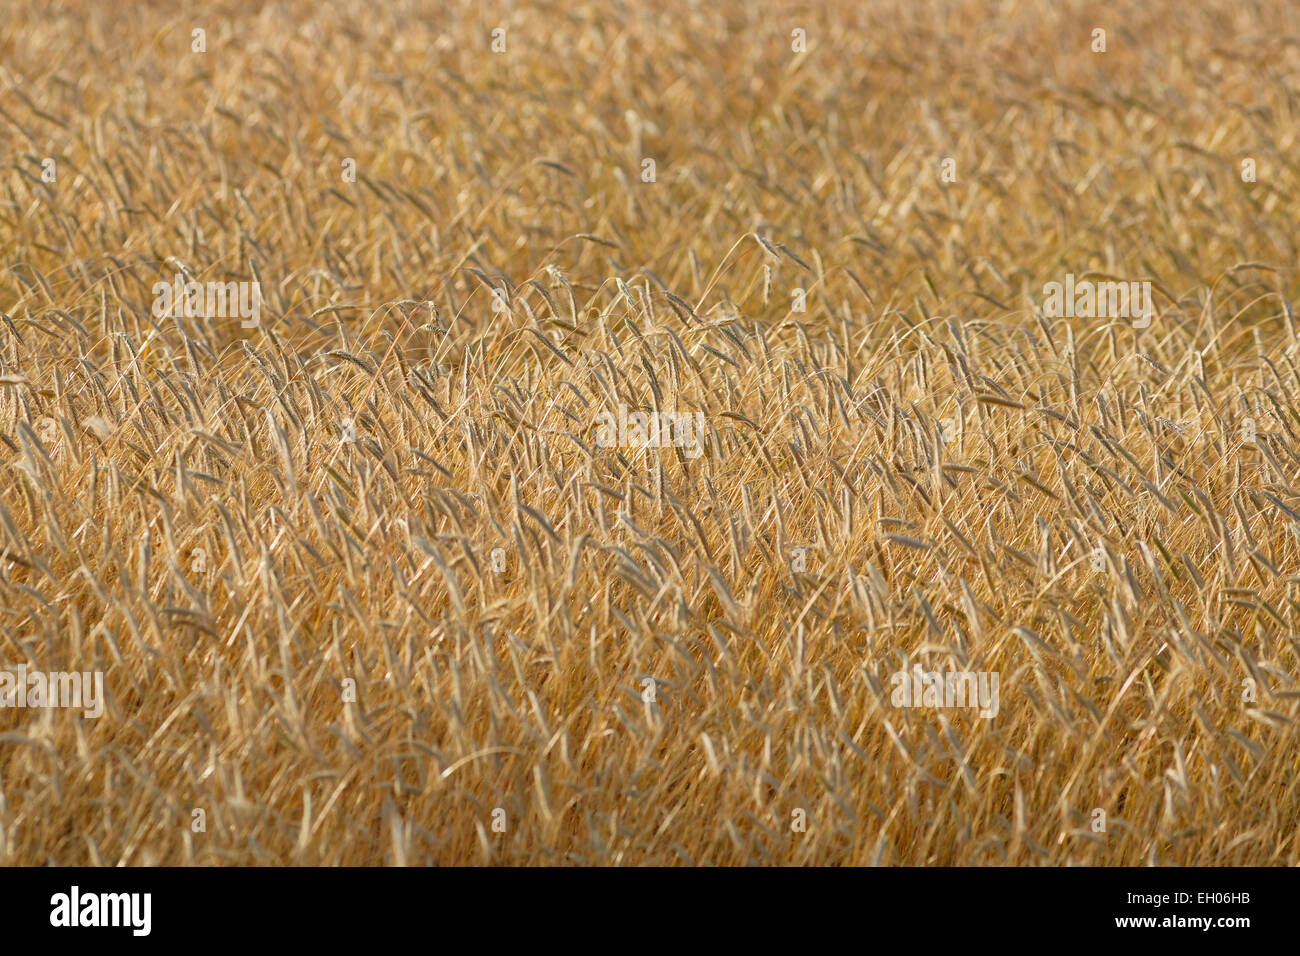 Austria, Lower Austria, Grain field Stock Photo